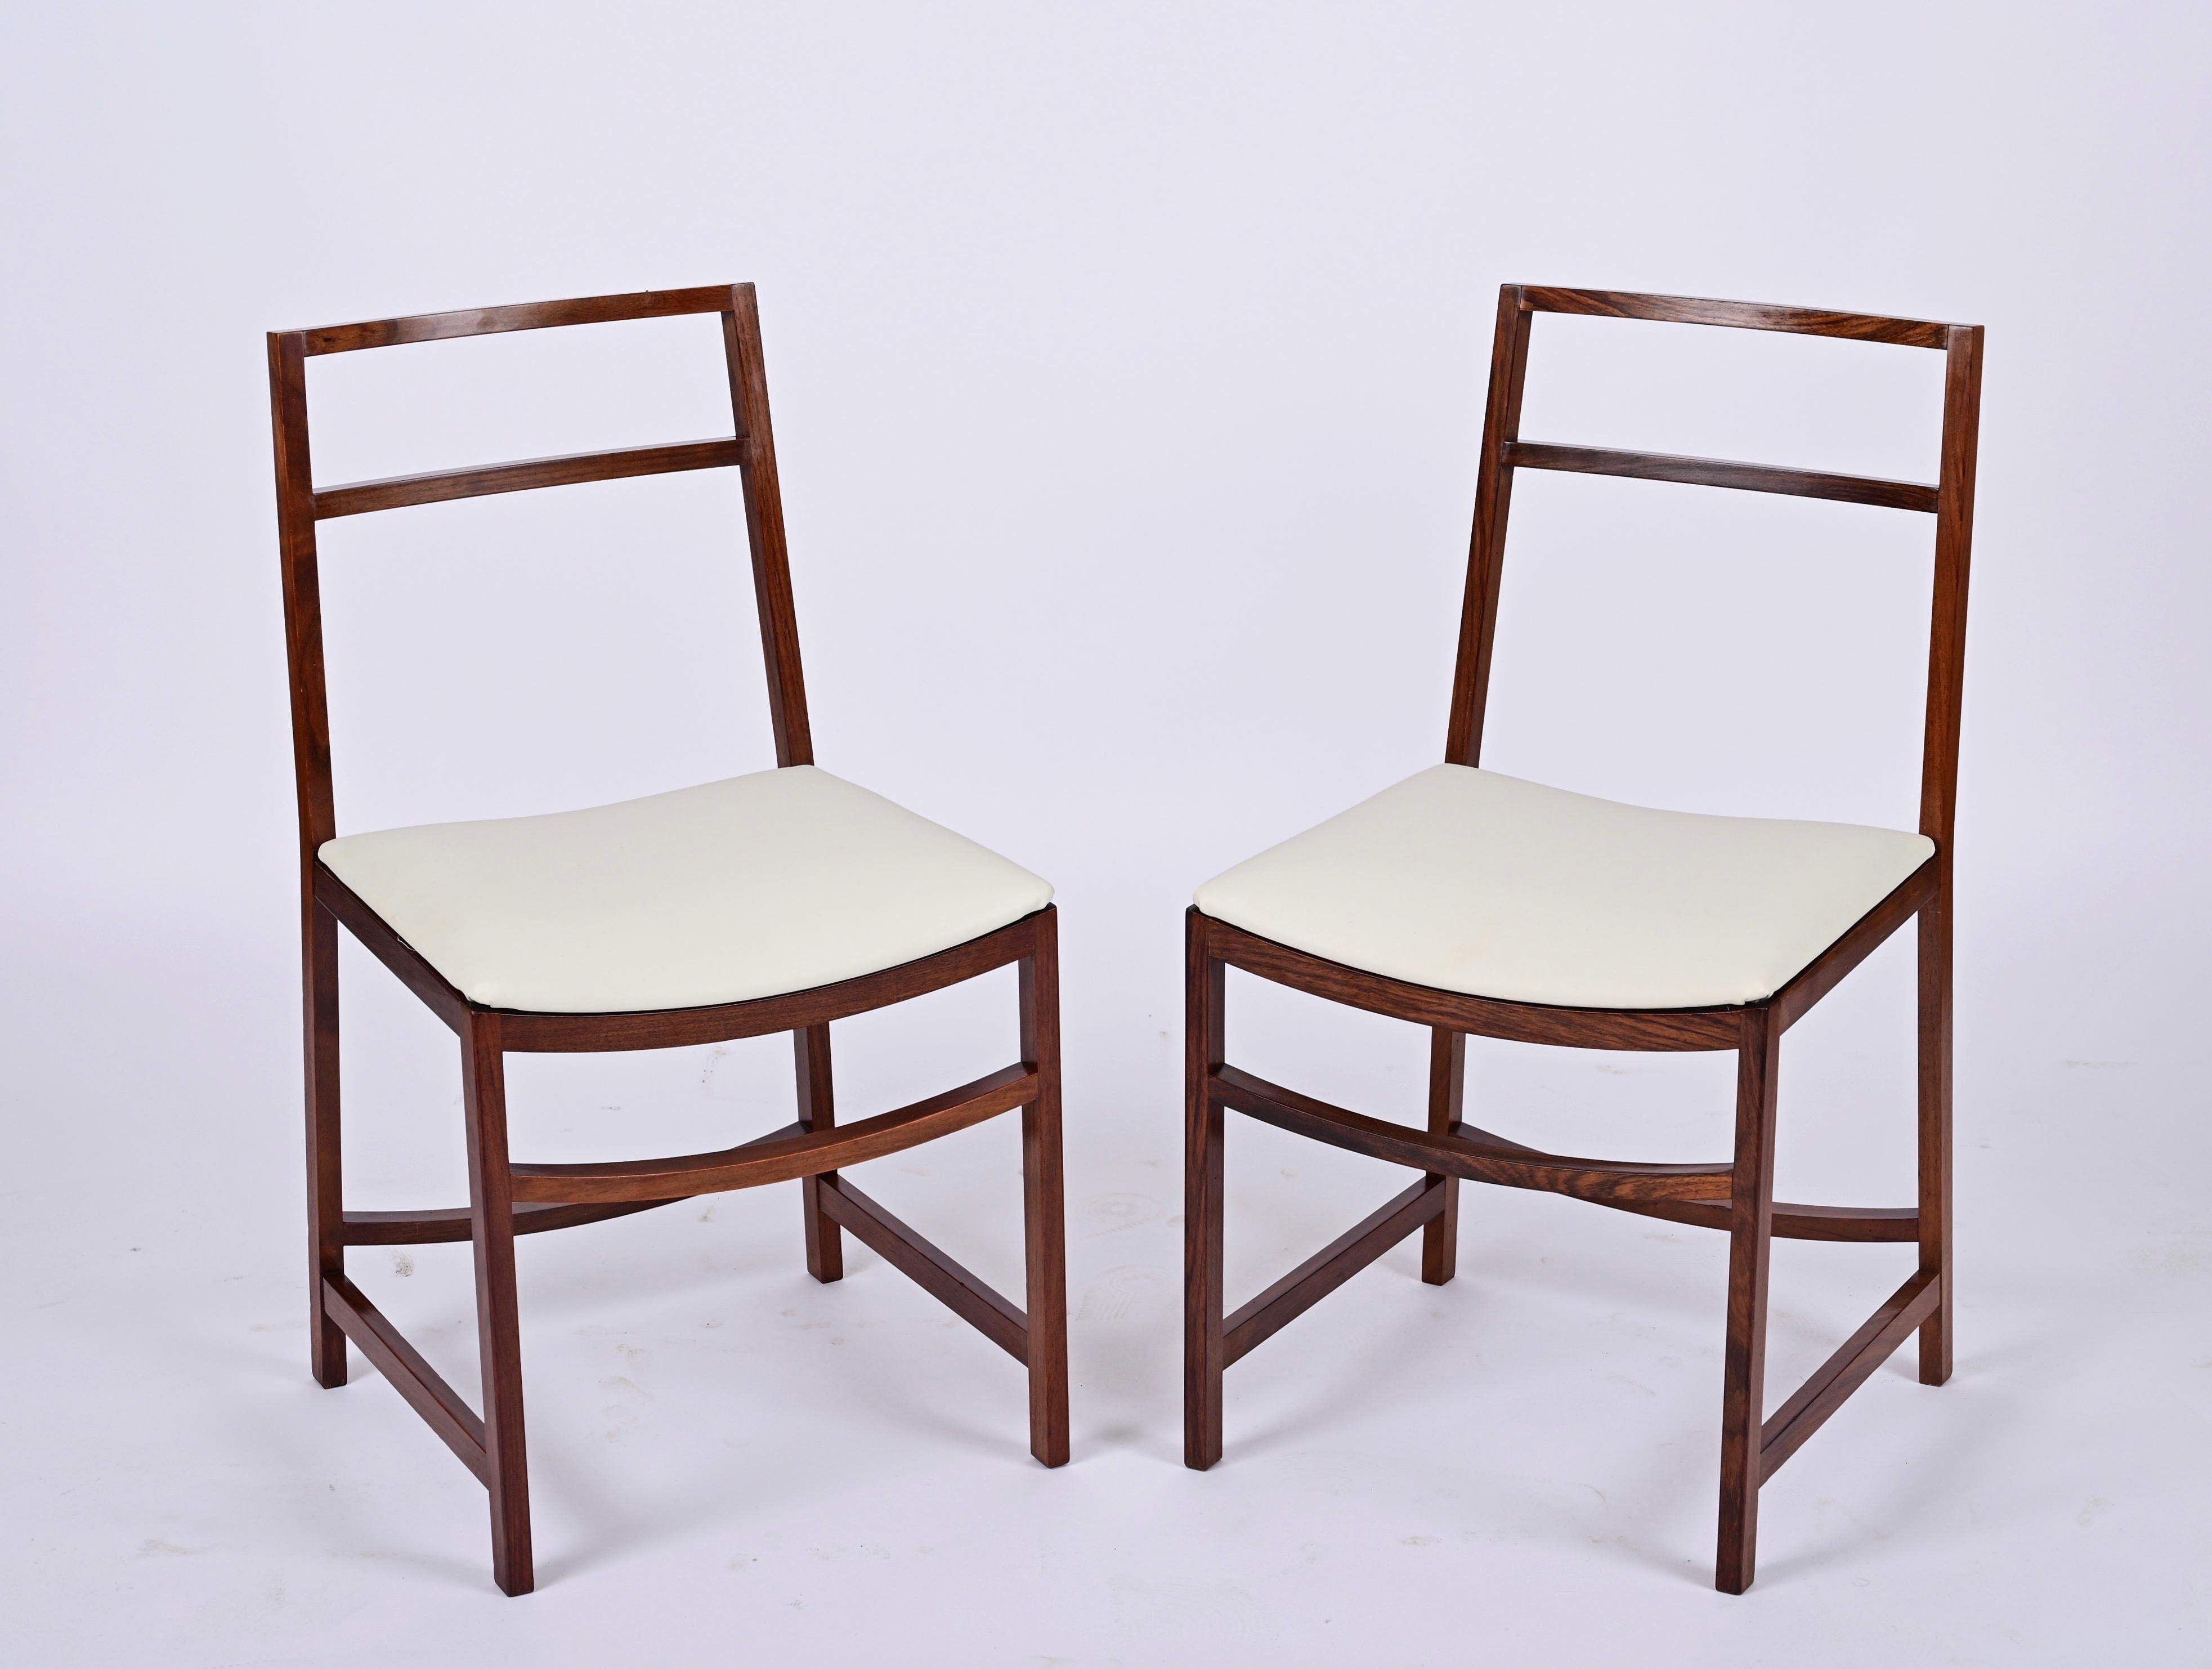 Midcentury Italian Dining Chairs in Teak, Renato Venturi for MIM Roma, 1960s For Sale 10